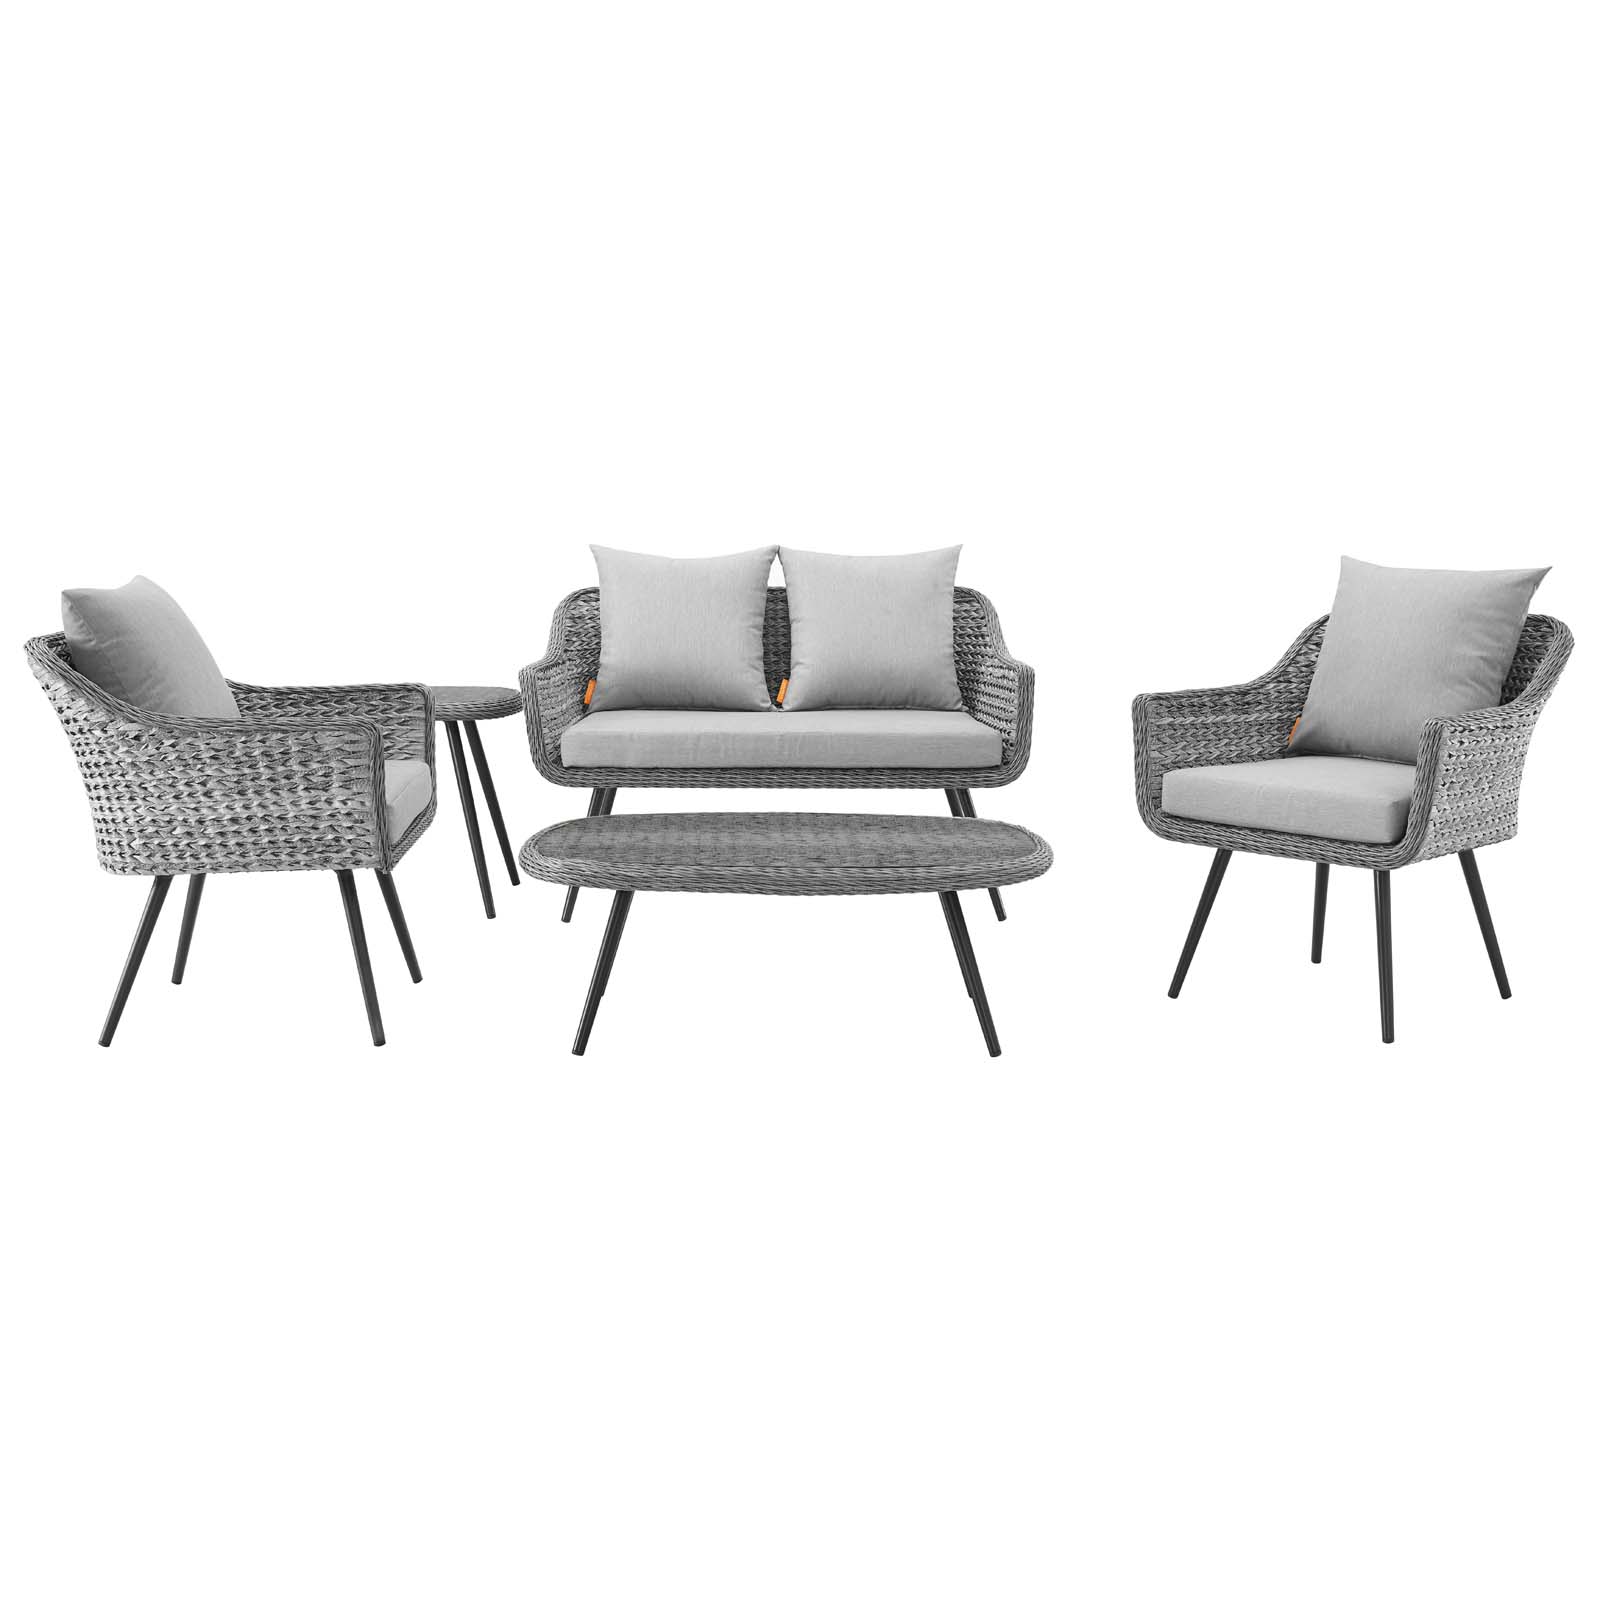 Contemporary Modern Urban Designer Outdoor Patio Balcony Garden Furniture Lounge Sofa, Chair and Coffee Table Set, Aluminum Fabric Wicker Rattan, Grey Gray - image 5 of 9